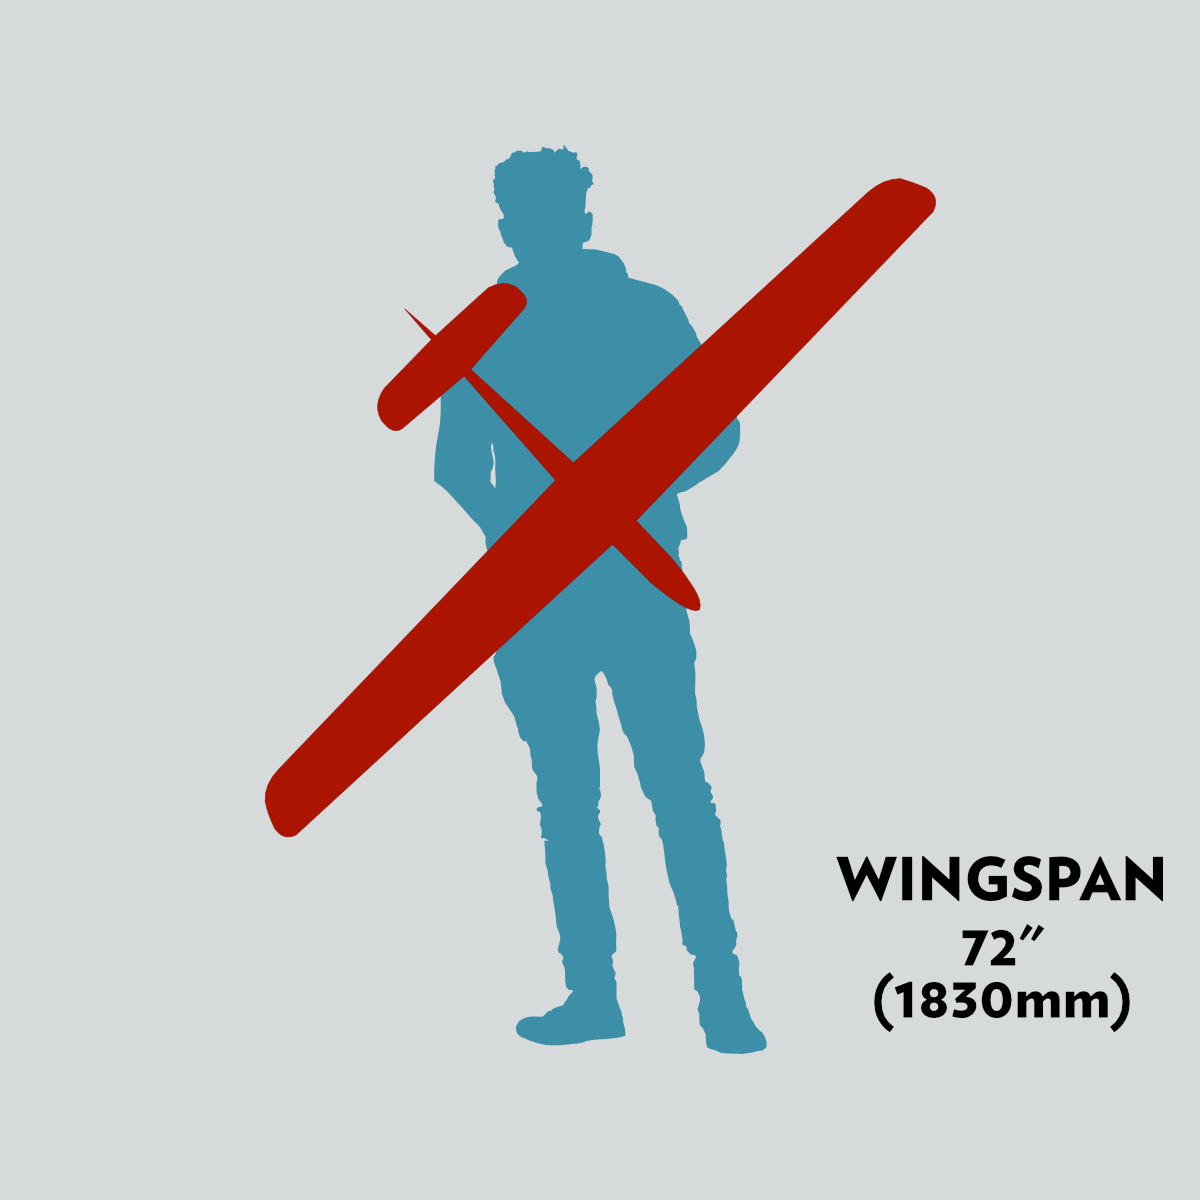 72" (1830mm) wingspan